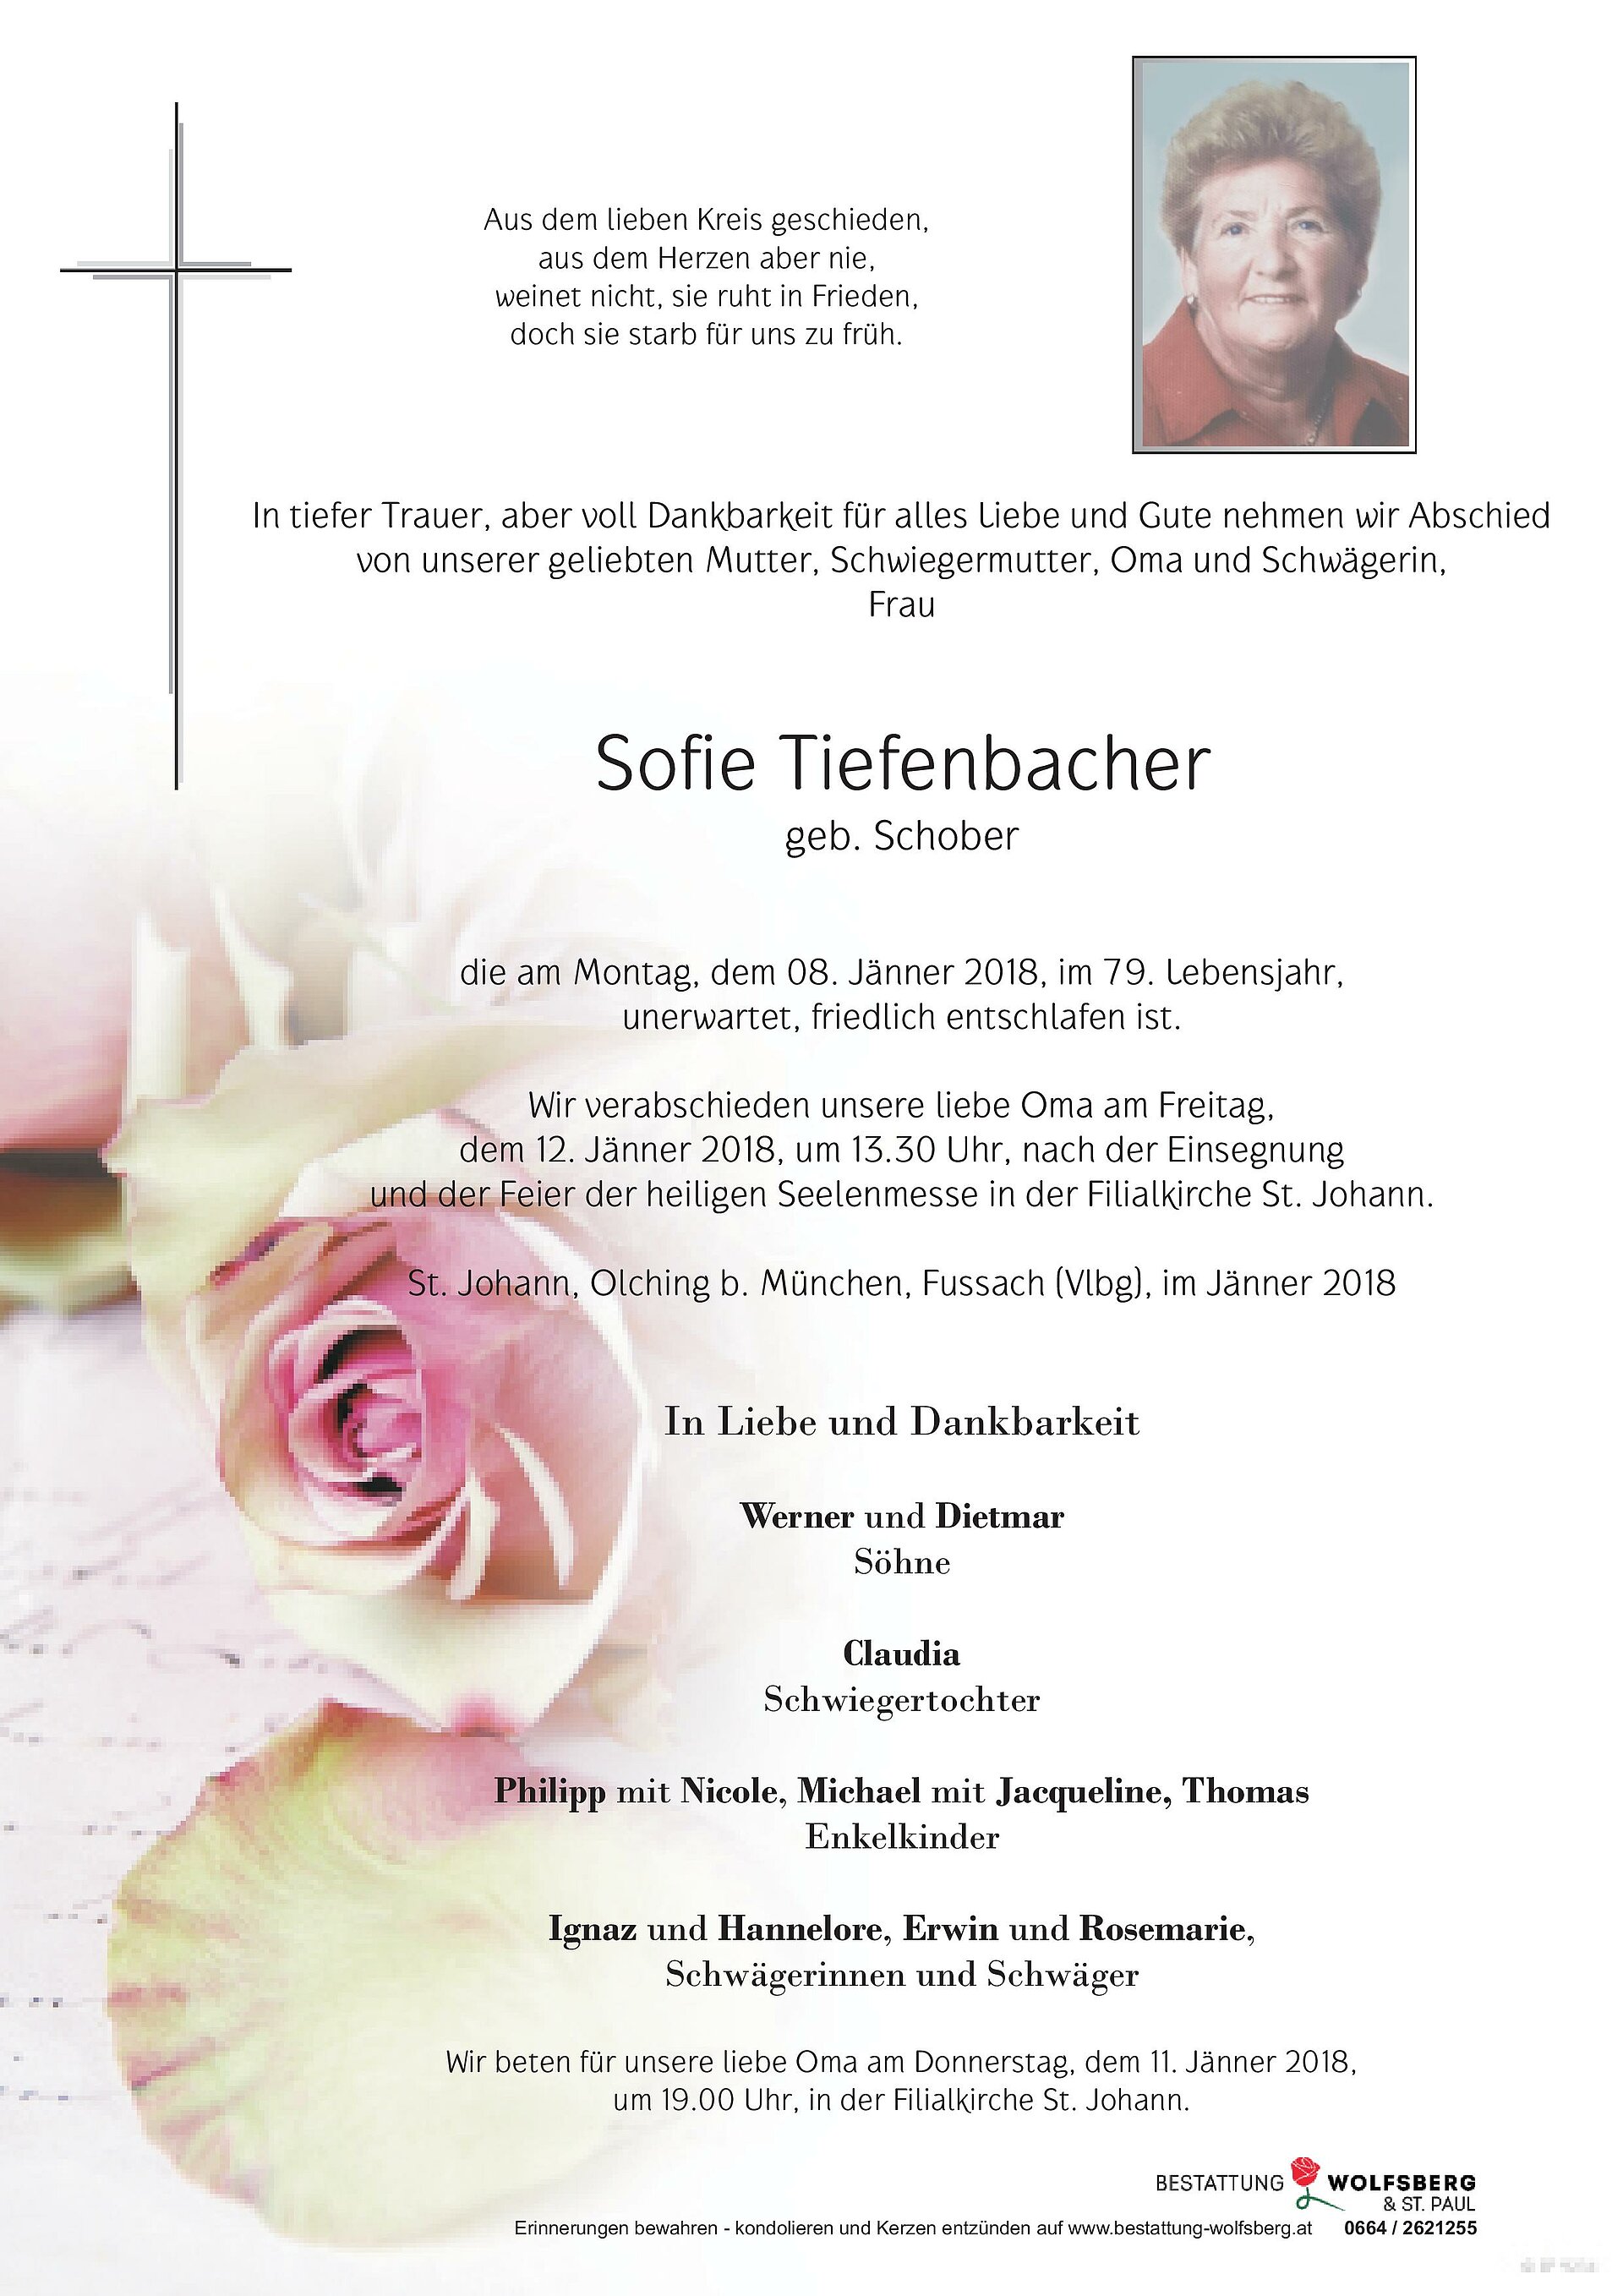 Sofie-Tiefenbacher-page-001-2.jpg